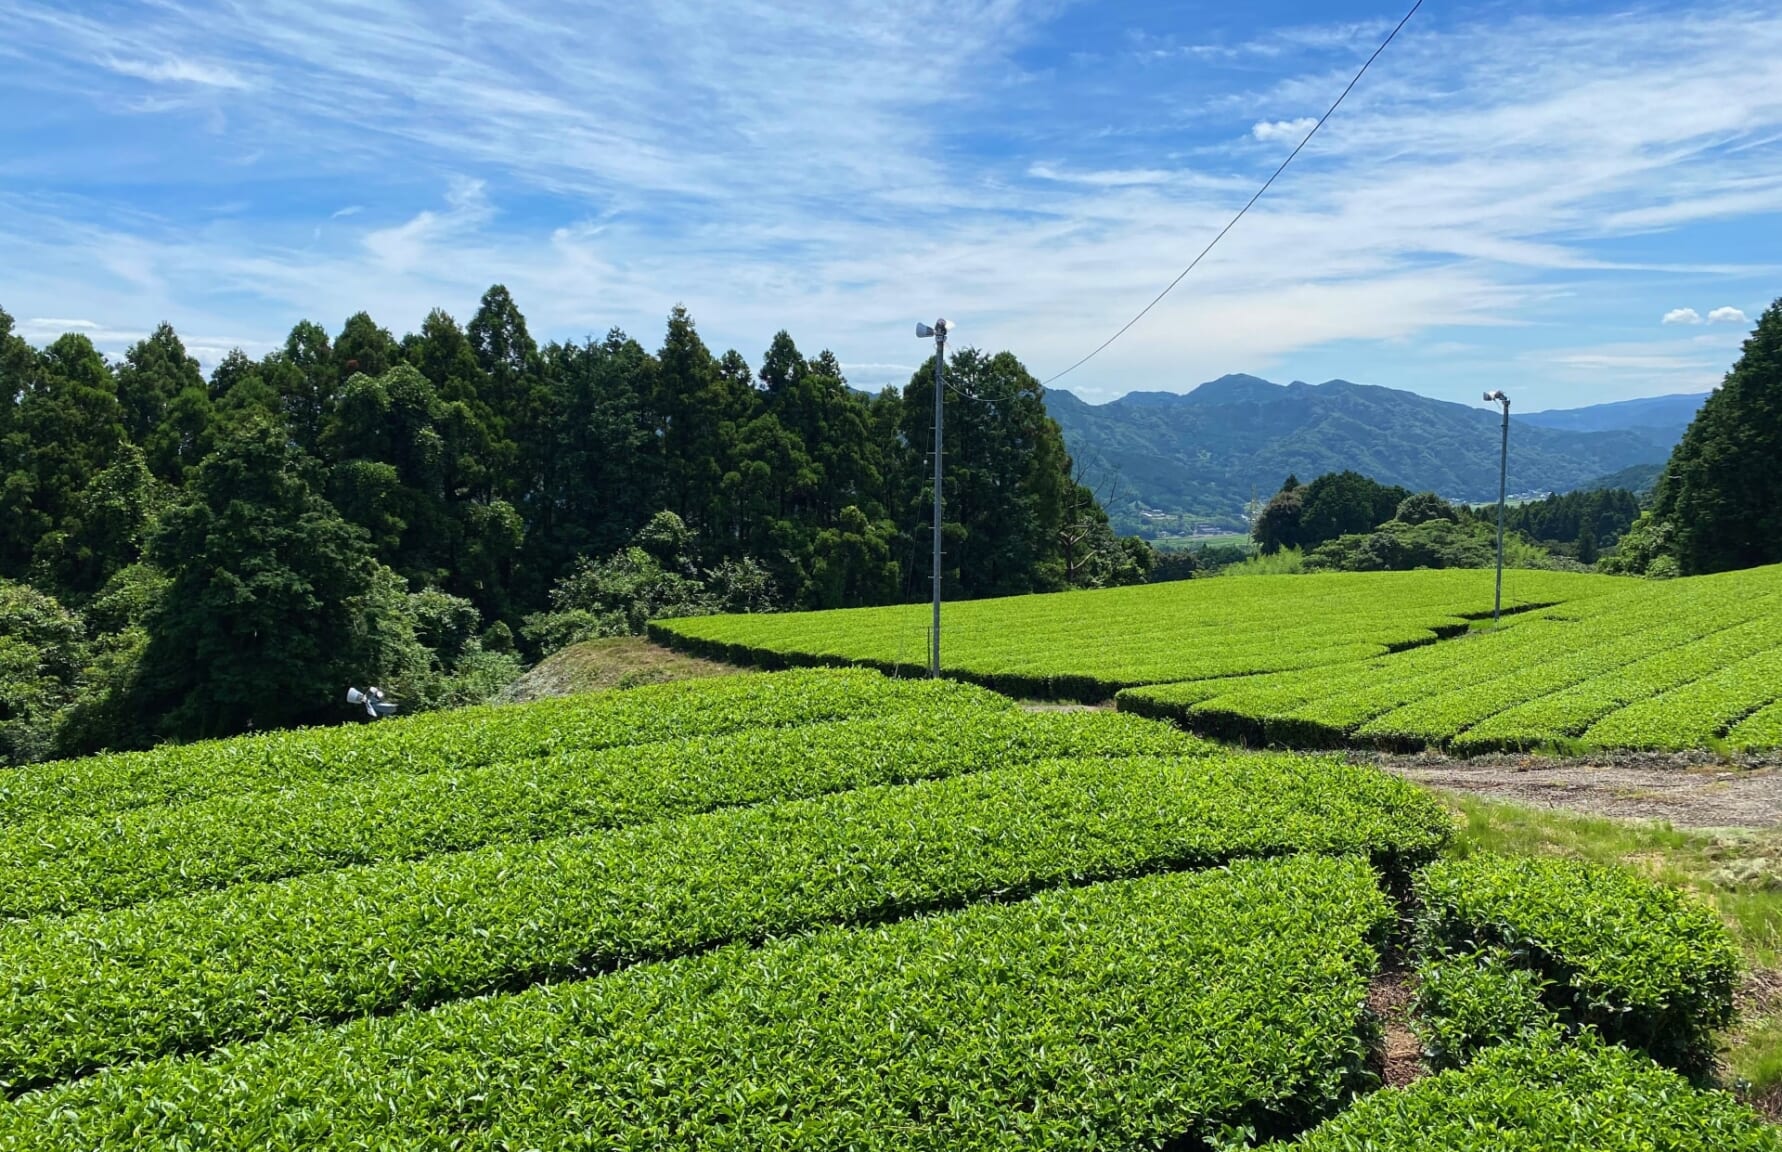 Ureshino City Tea leaves plantation